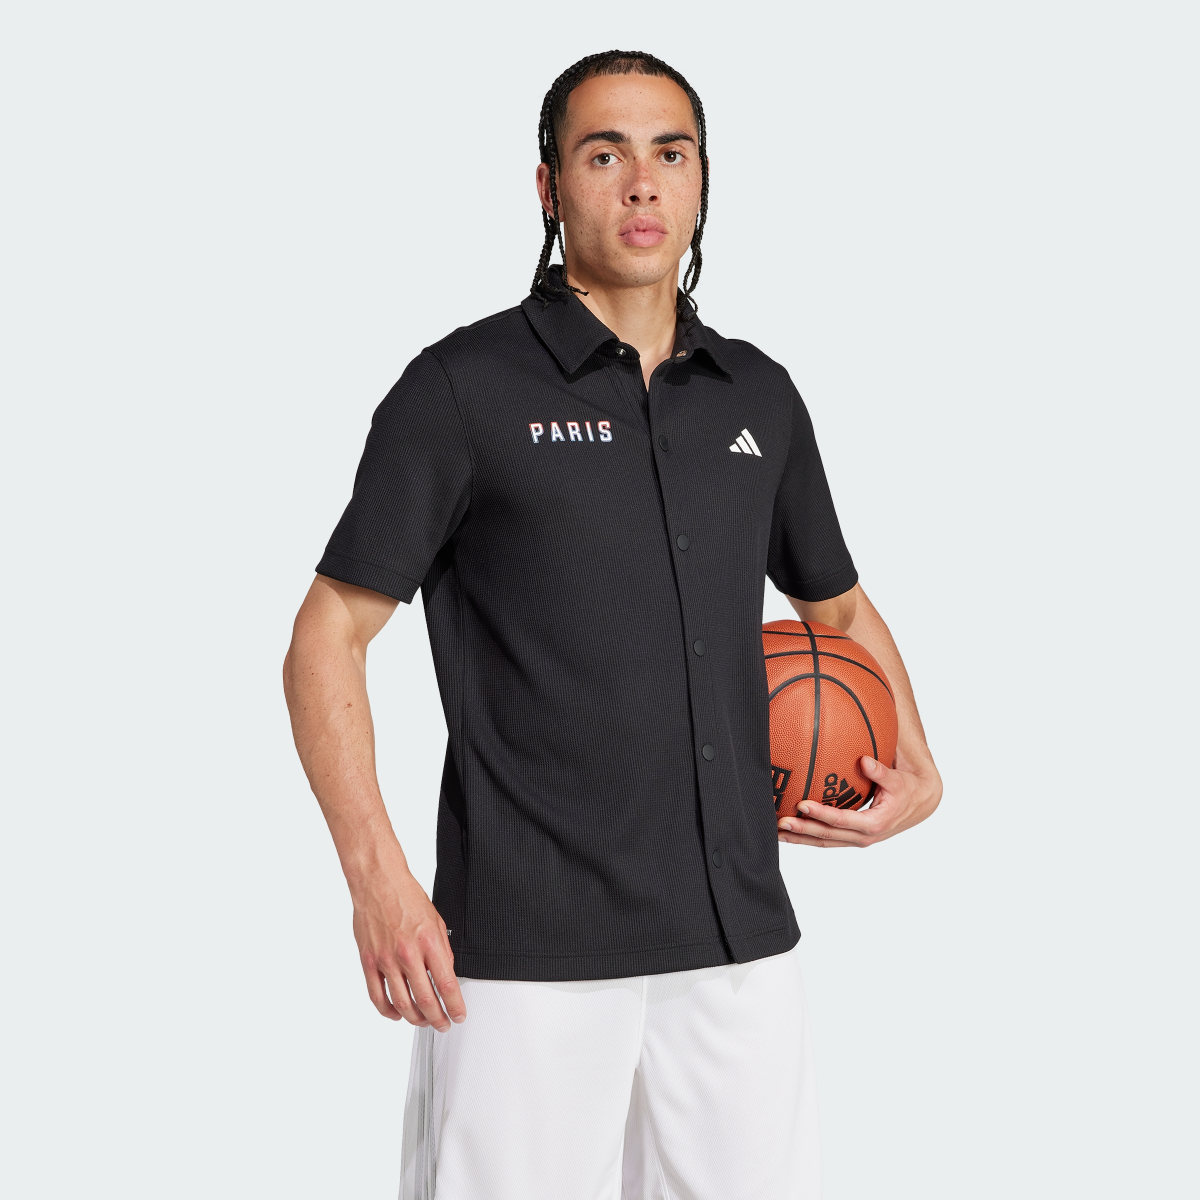 Adidas Paris Basketball Warm-Up Shooter AEROREADY Shirt. 4